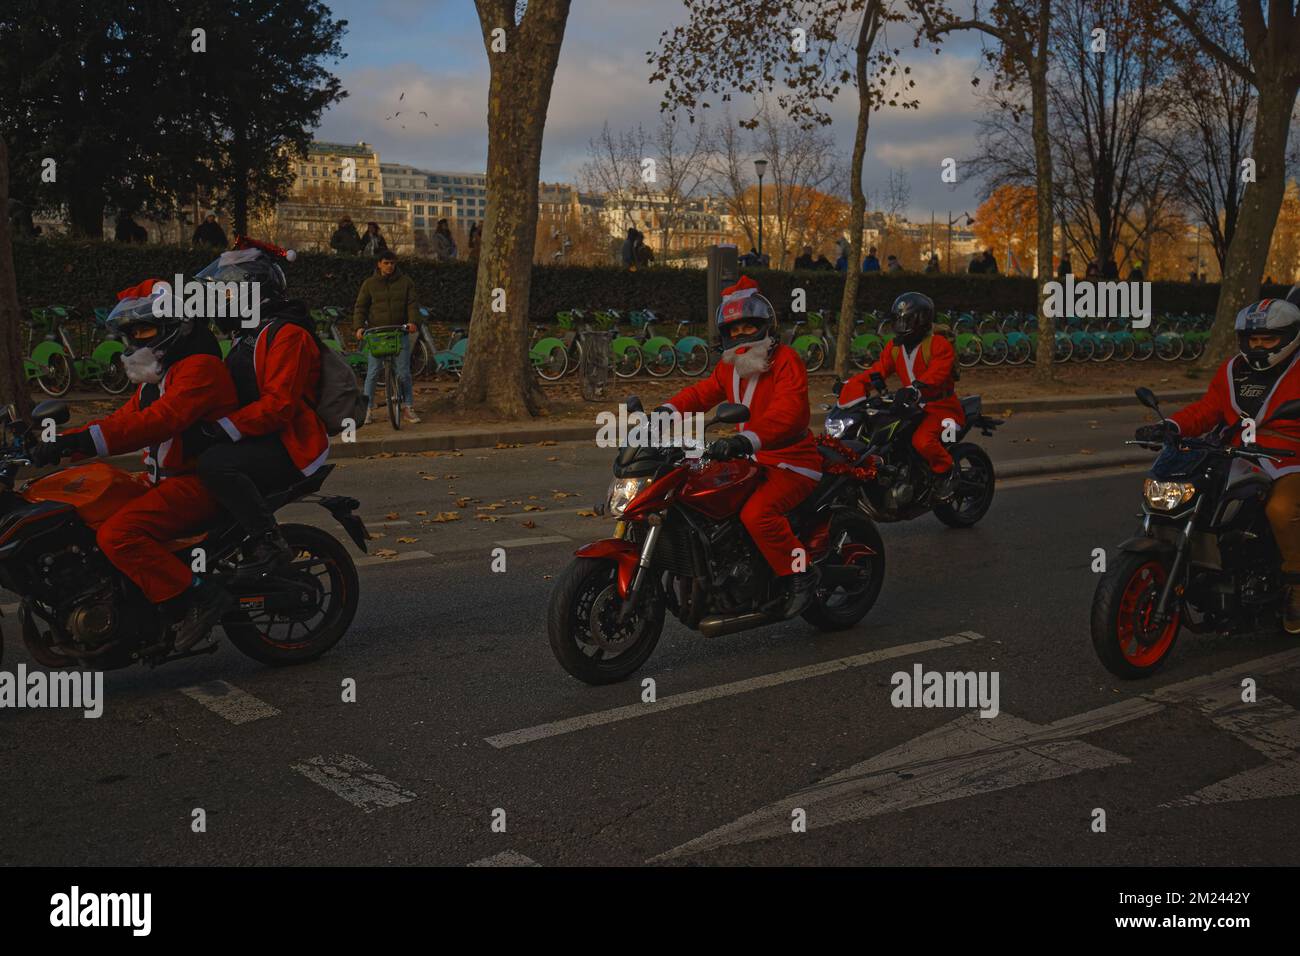 The group of men dressed in Santas on motorbikes seen in Paris near Eiffel tower. Stock Photo